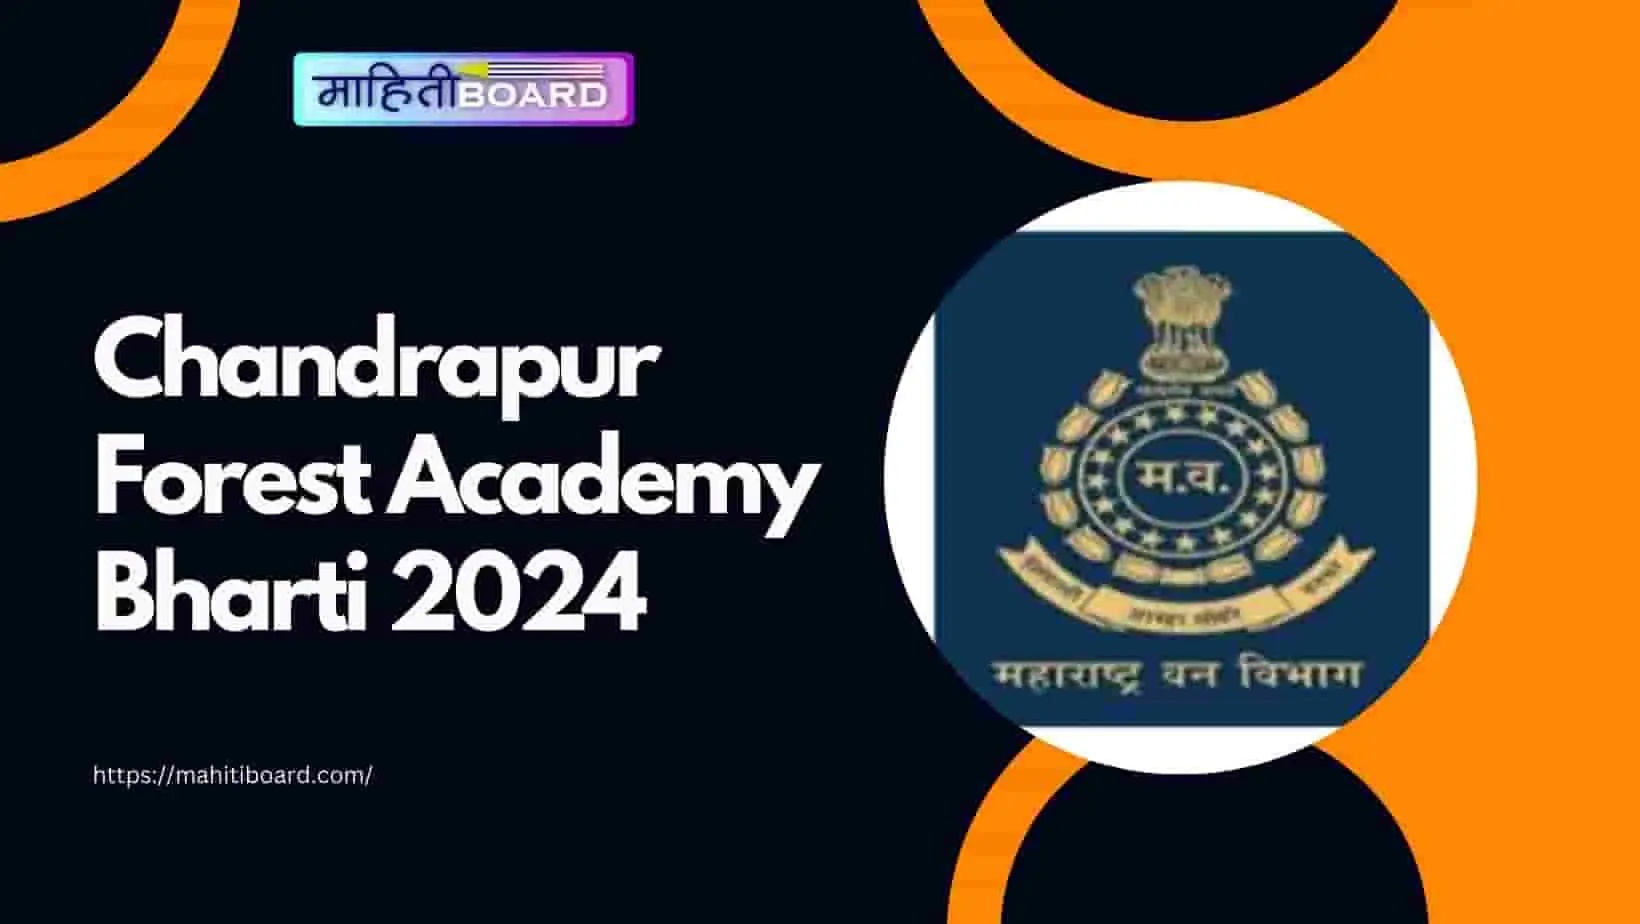 Chandrapur Forest Academy Bharti 2024